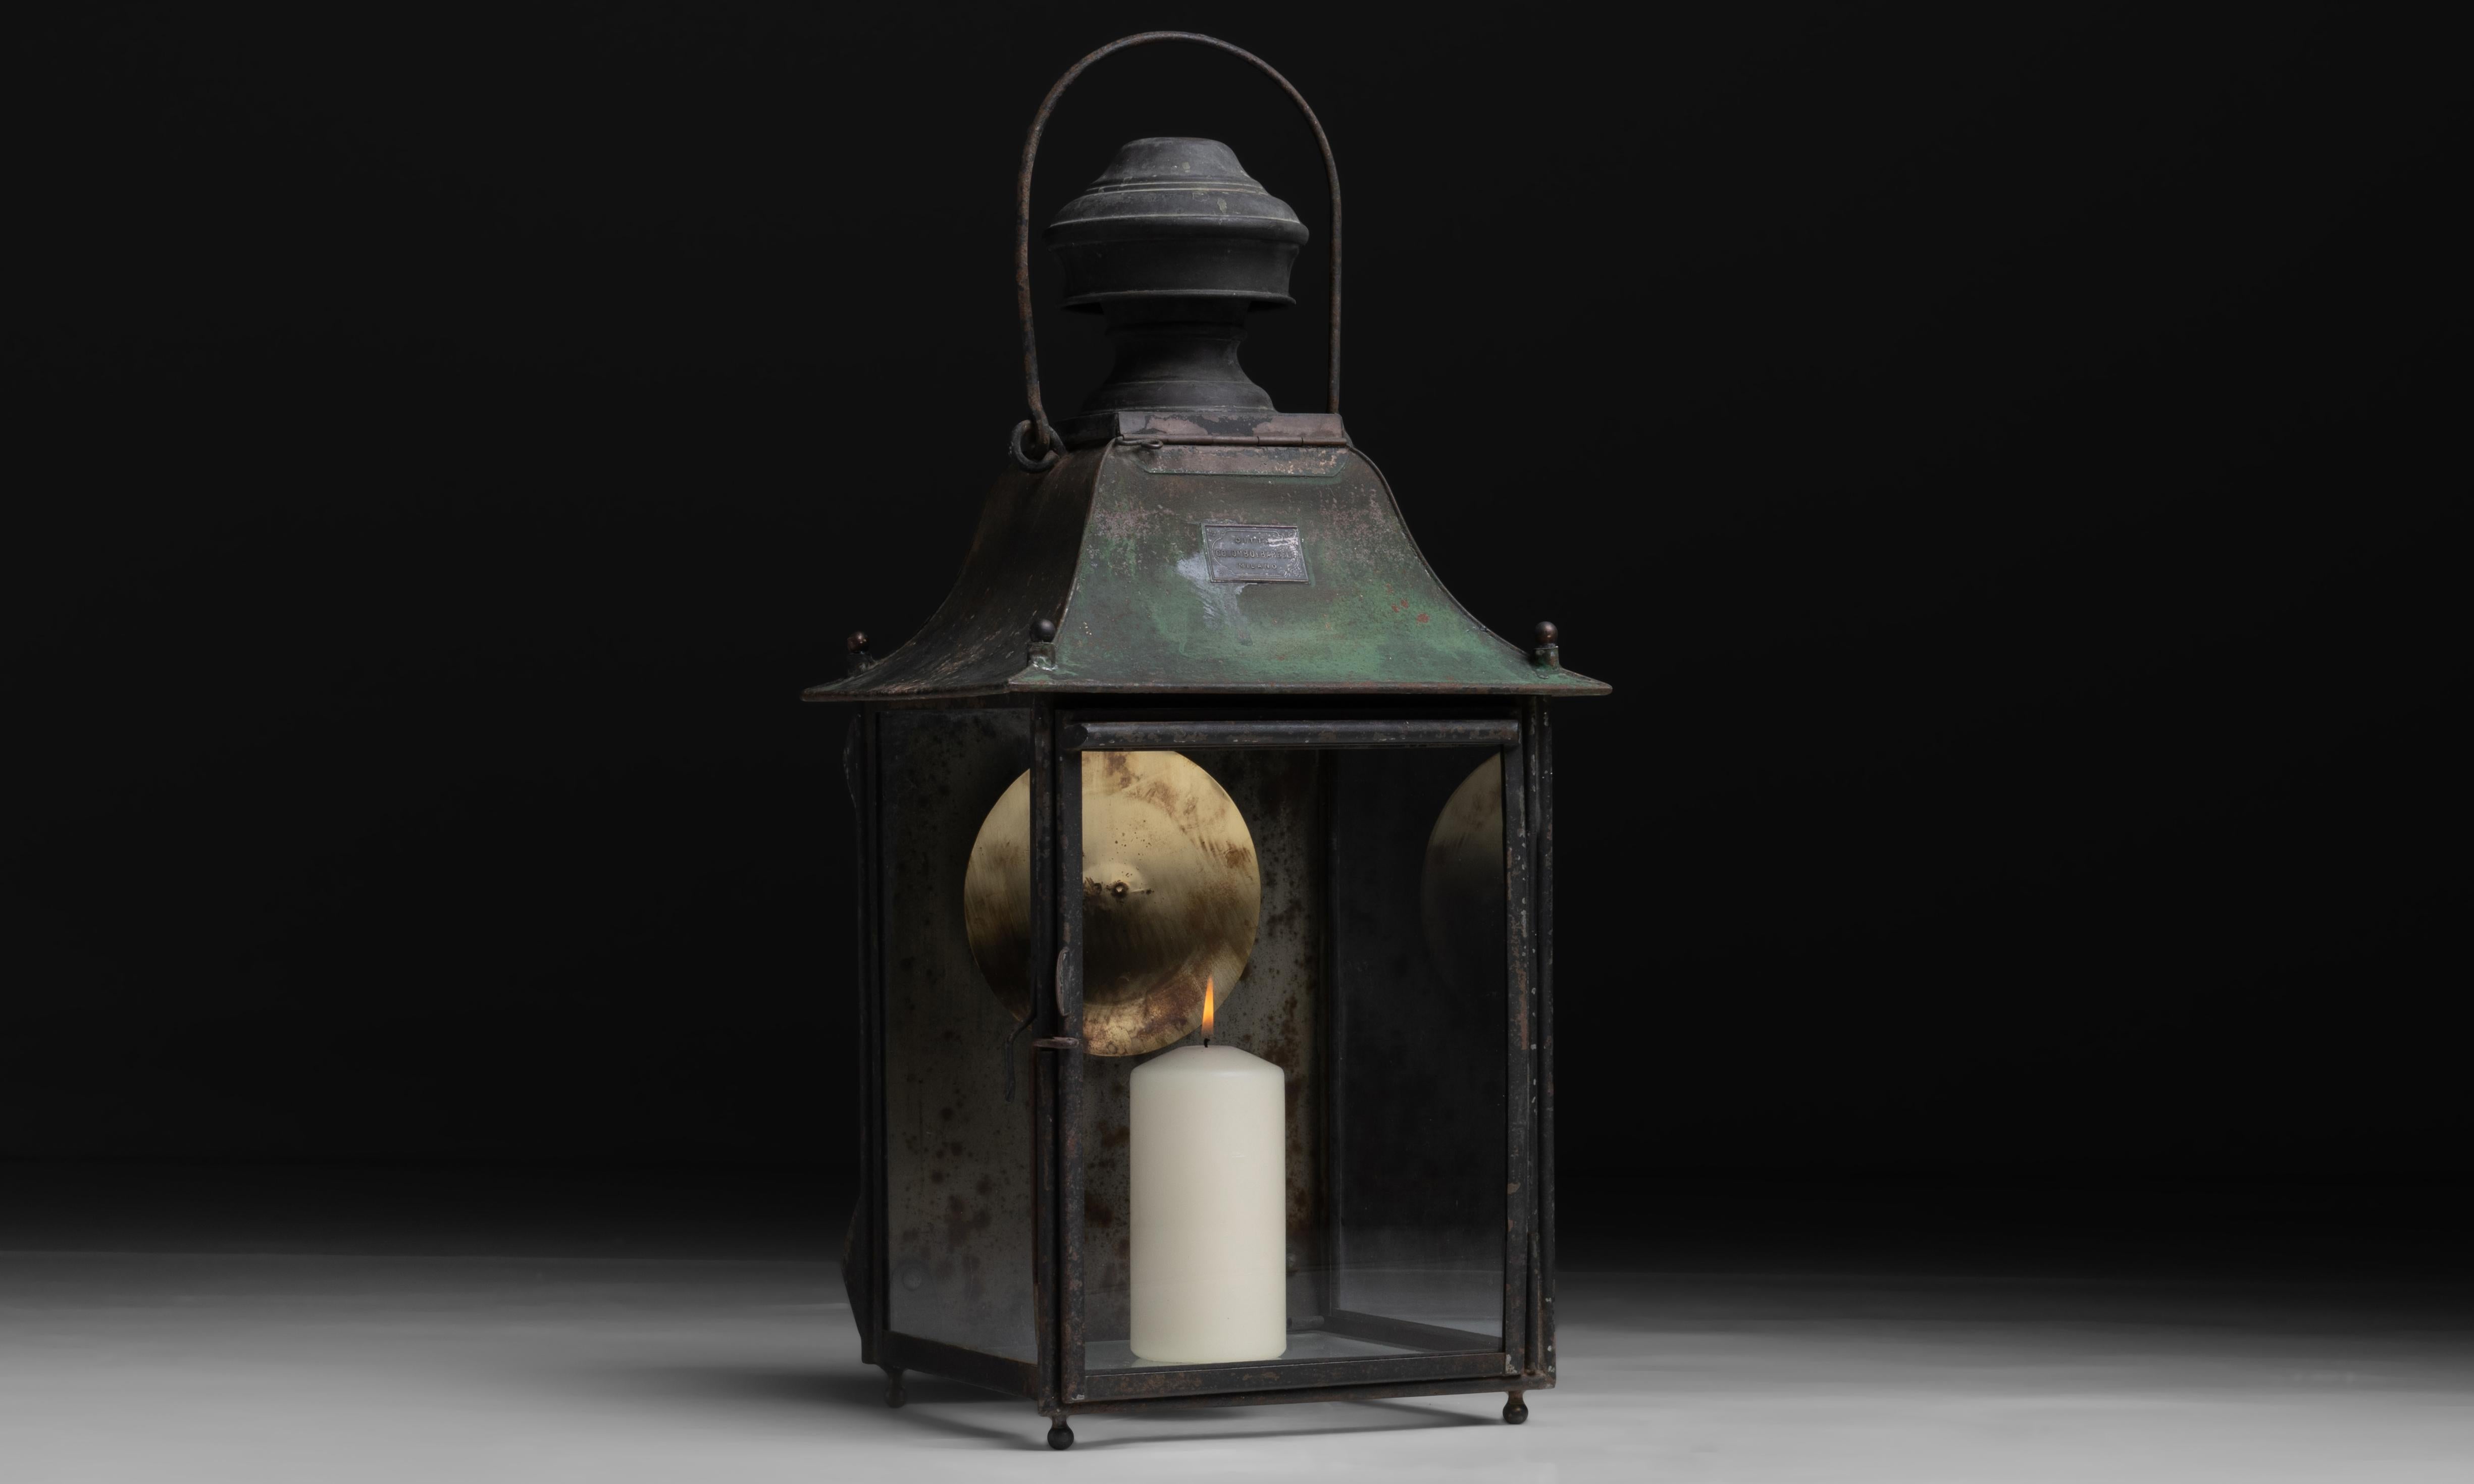 Copper Lantern

Made in Italy Circa 1880

Marked Ditta Colombo e Bareggi – MILANO”

Measures 12.25